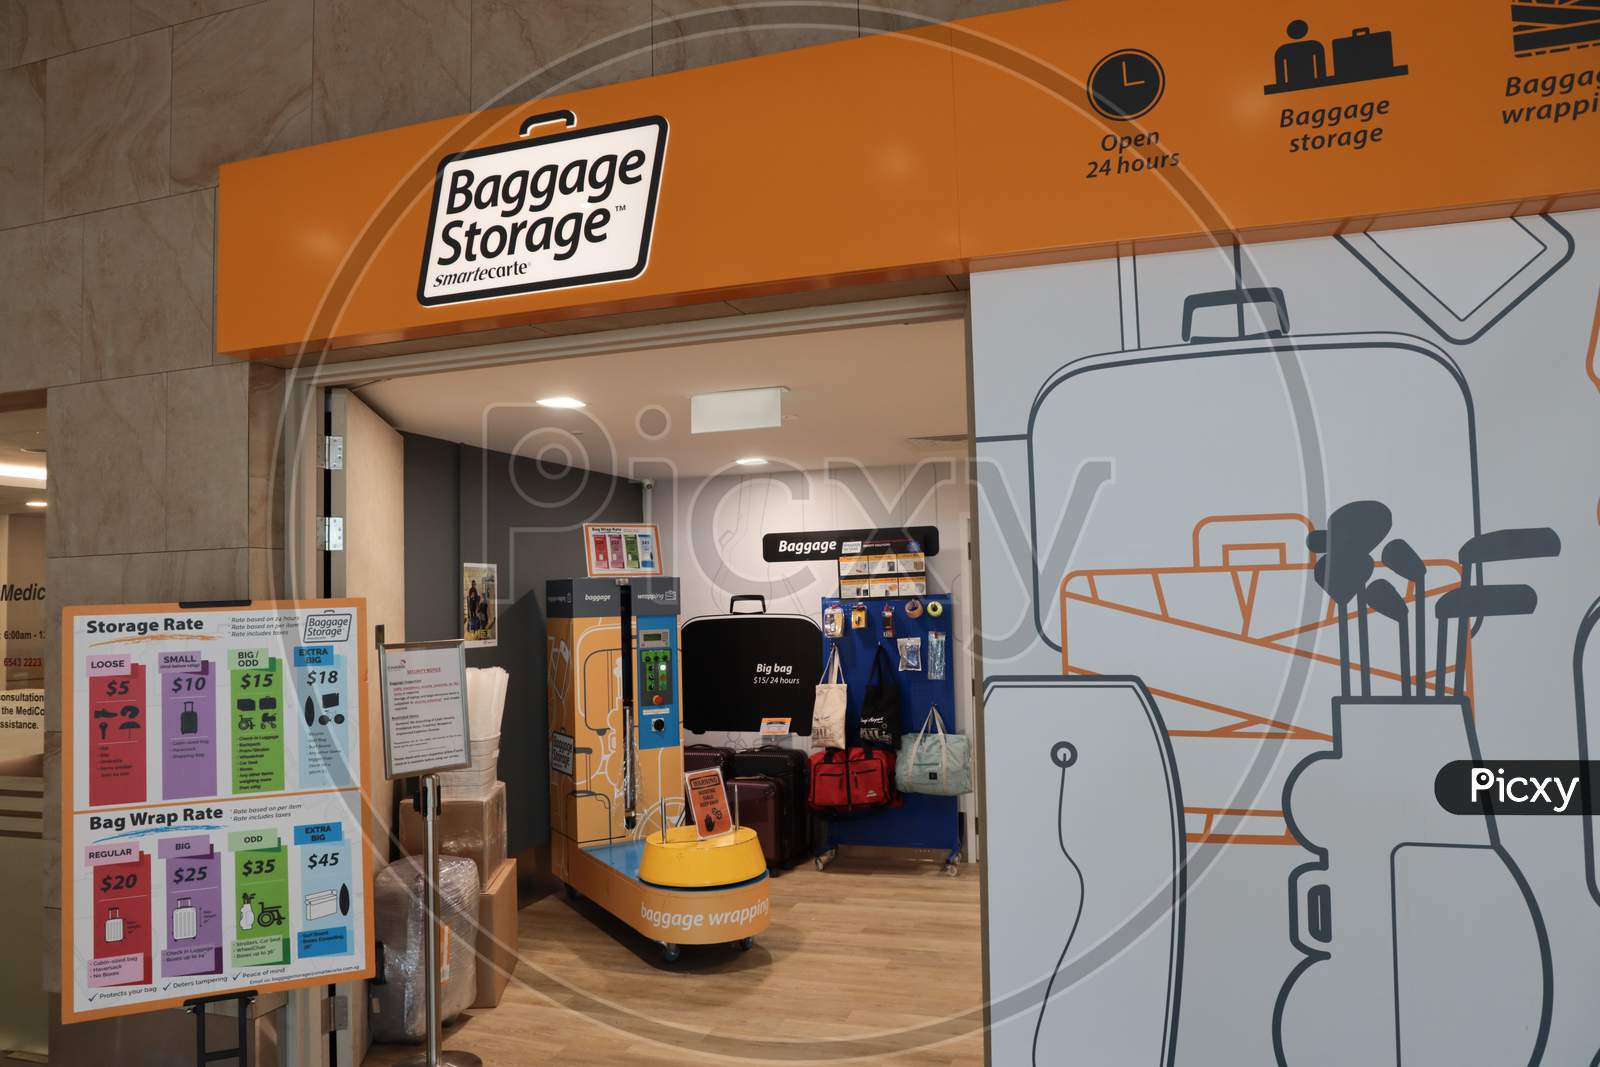 Baggage Storage Store At Changi Airport, Singapore